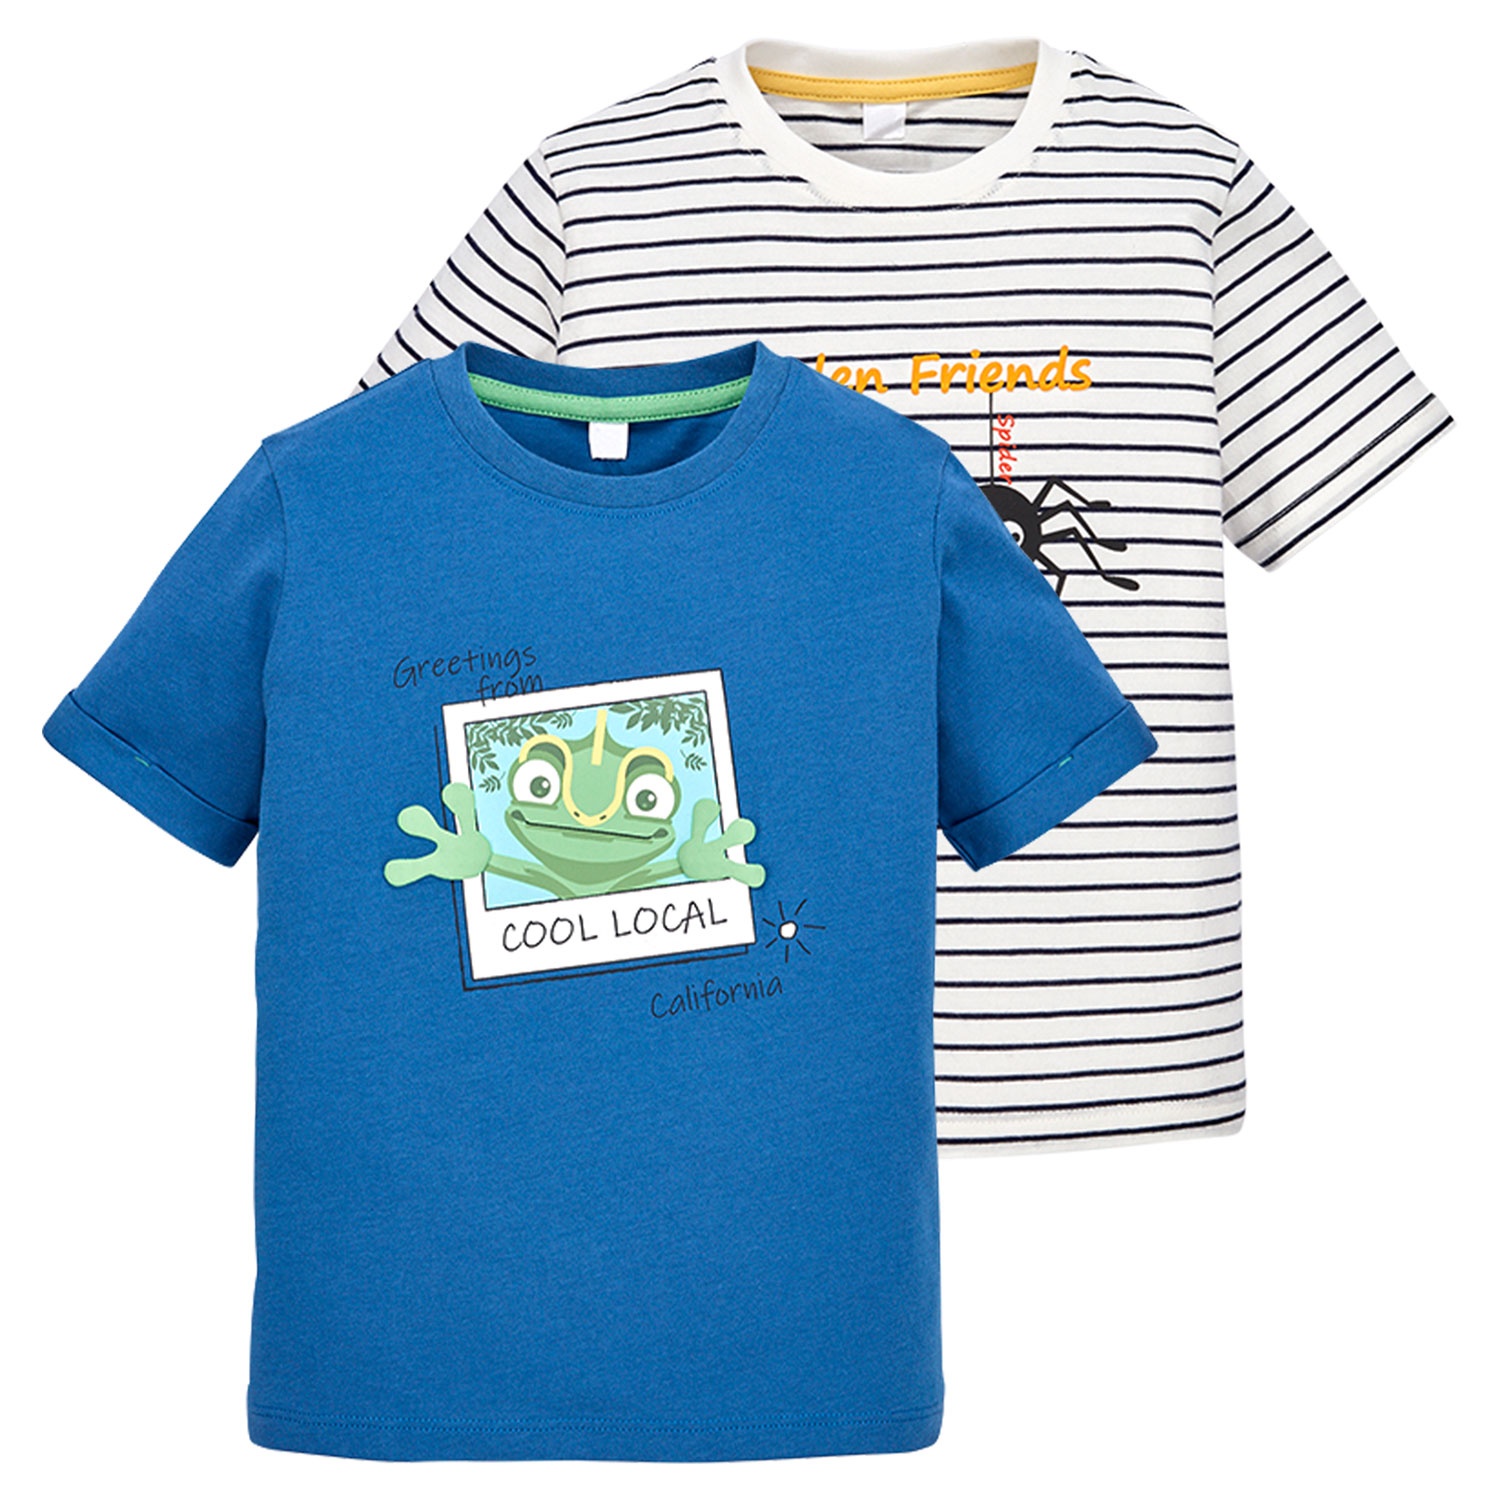 Tops und Hemden Poloshirts Impidimpi Poloshirts 74/80 Impidimpi 2er Set blau weiße Poloshirts in Gr Kinder Jungs Shirts 